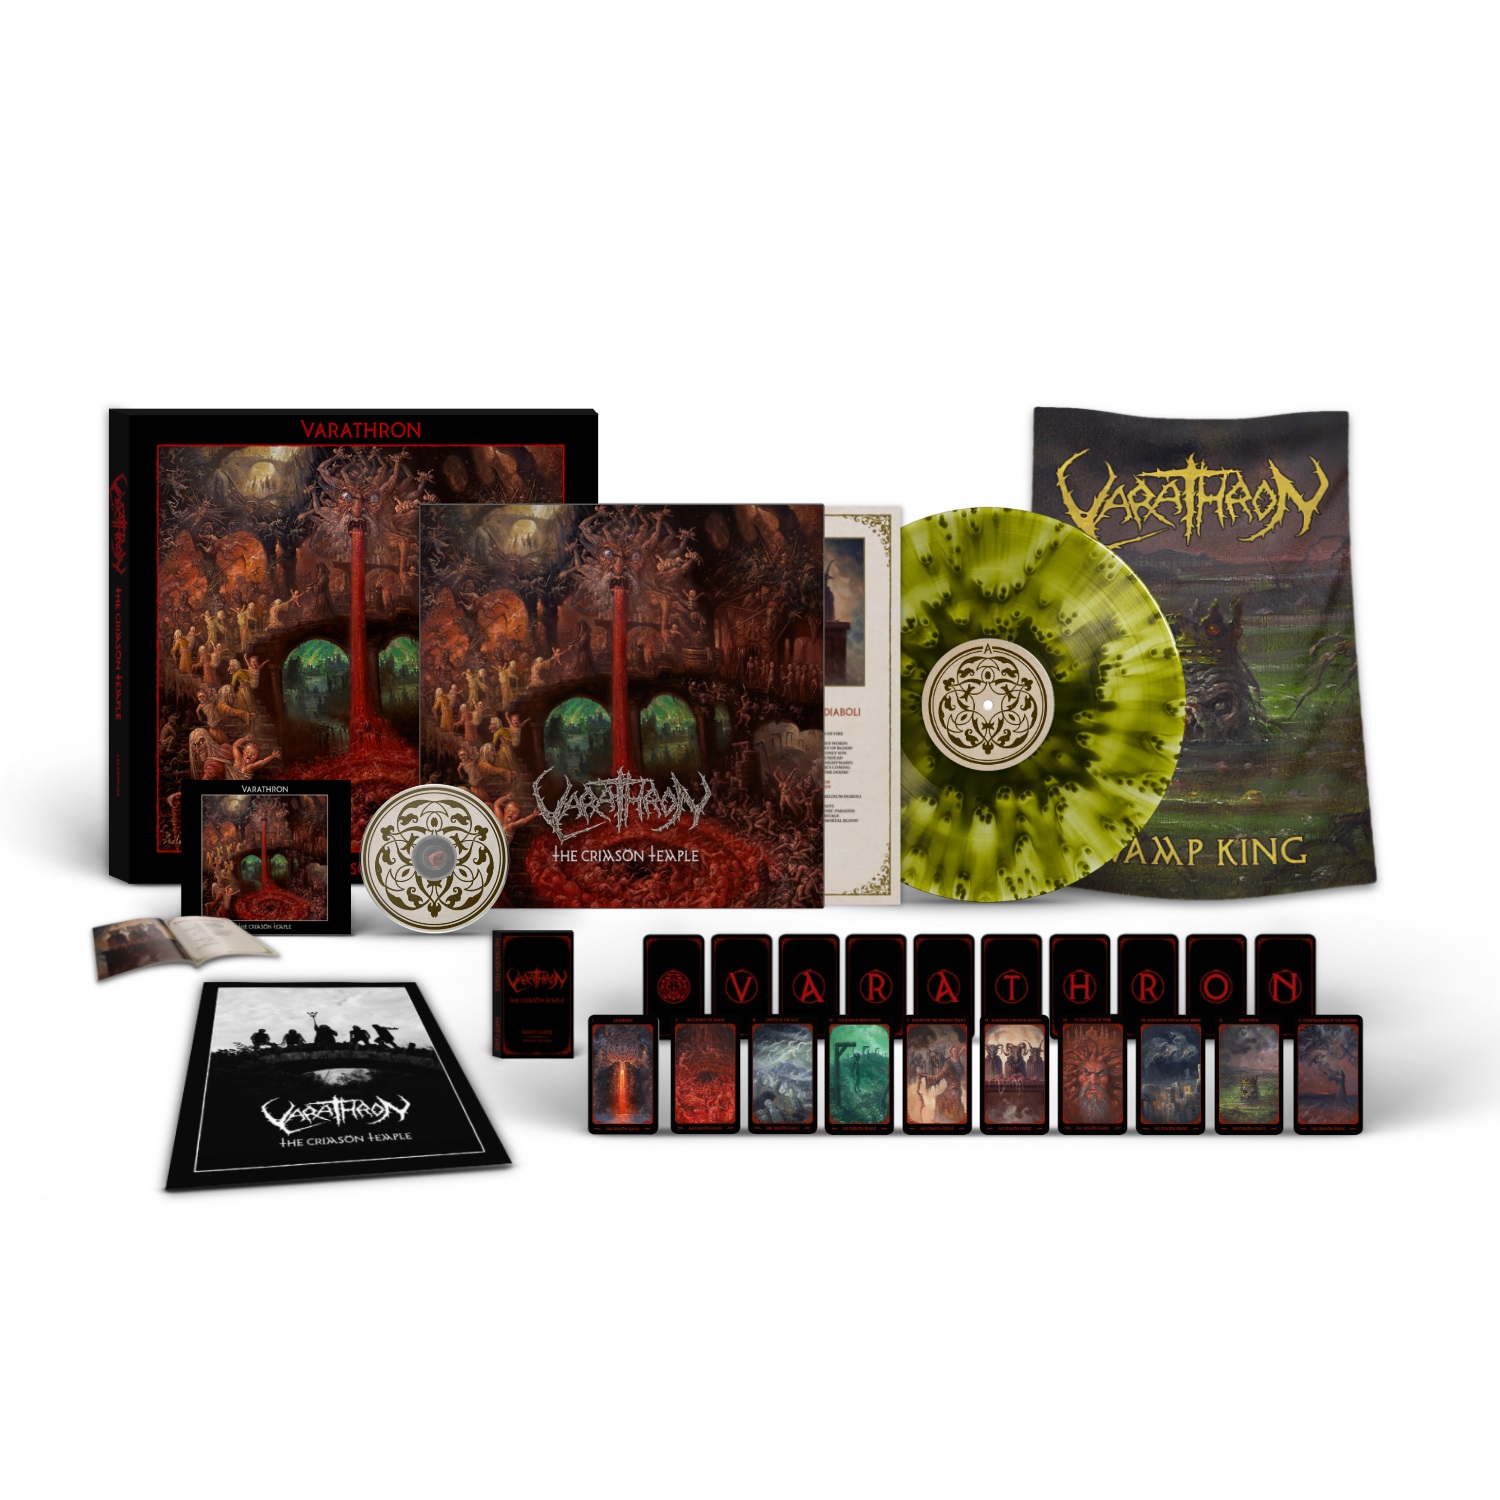 Varathron - The Crimson Temple Ltd Ed. LP Box Set.